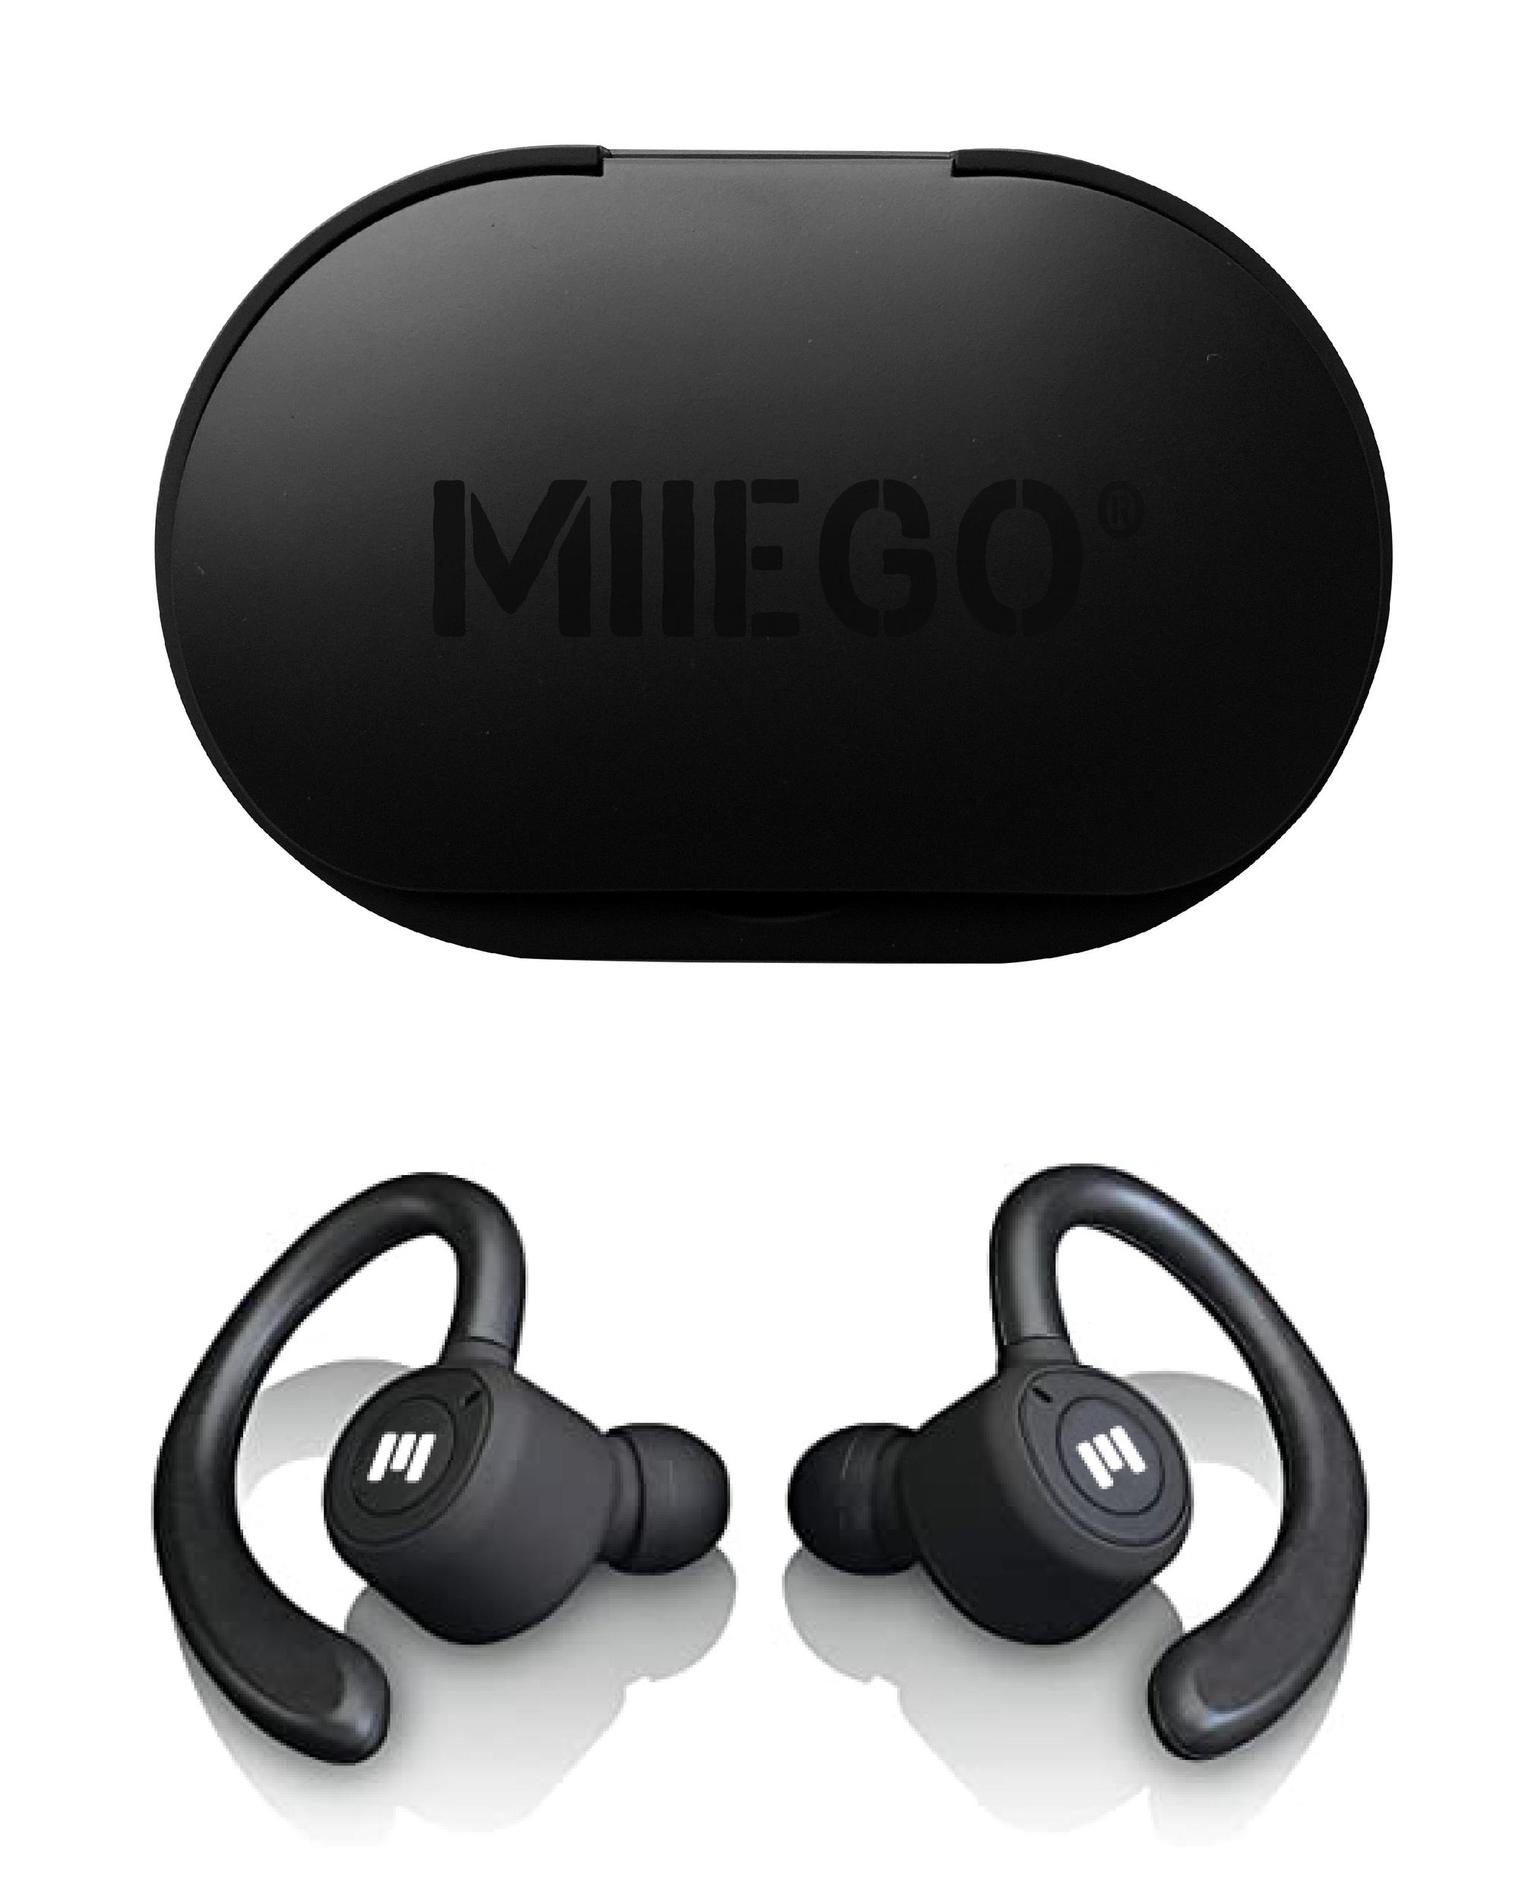 Høretelefoner til cykling - Miiego MiiBUDS Action II Sort